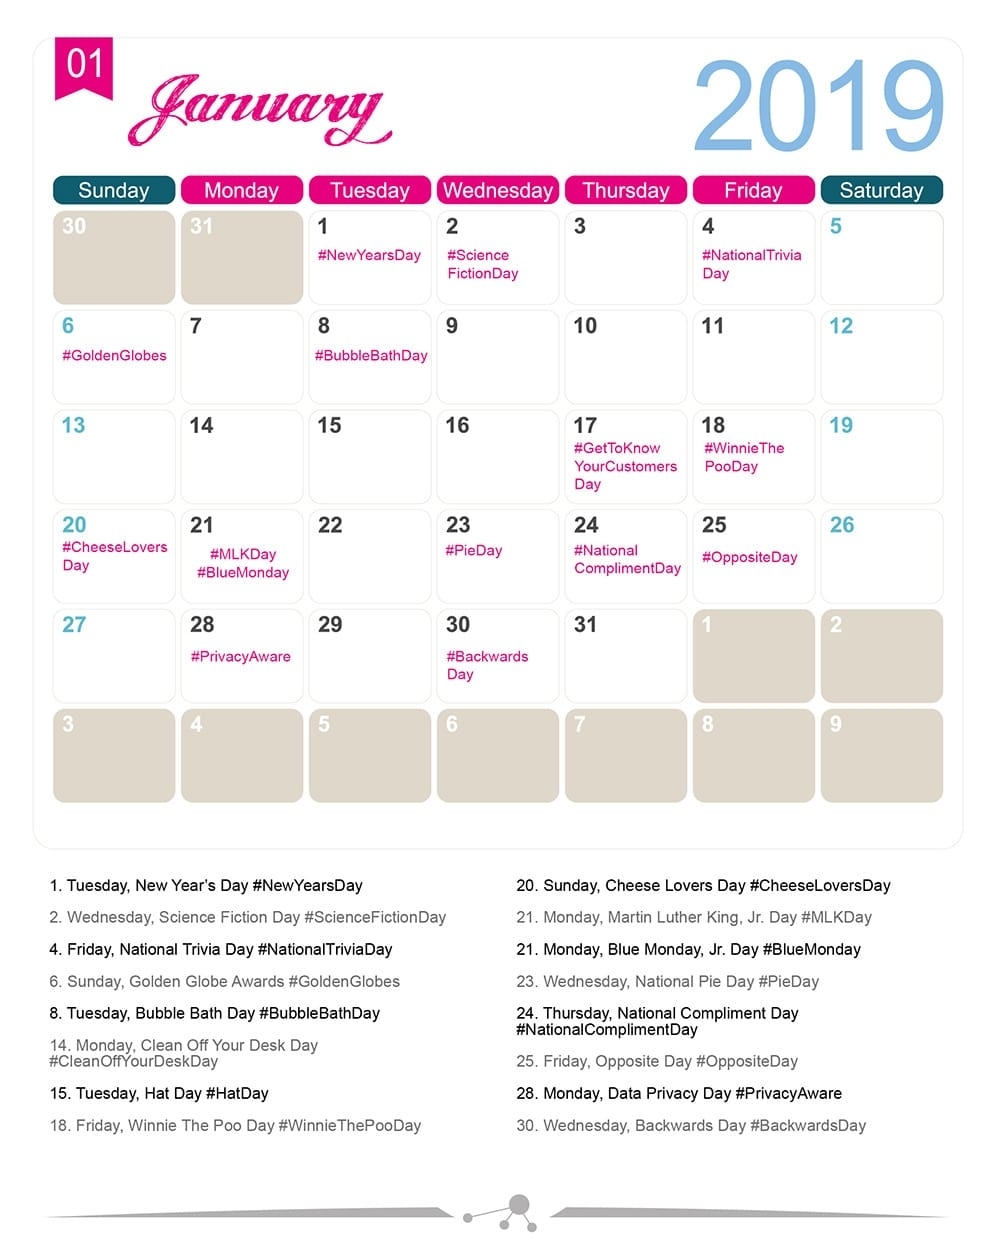 The 2019 Social Media Holiday Calendar - Make A Website Hub